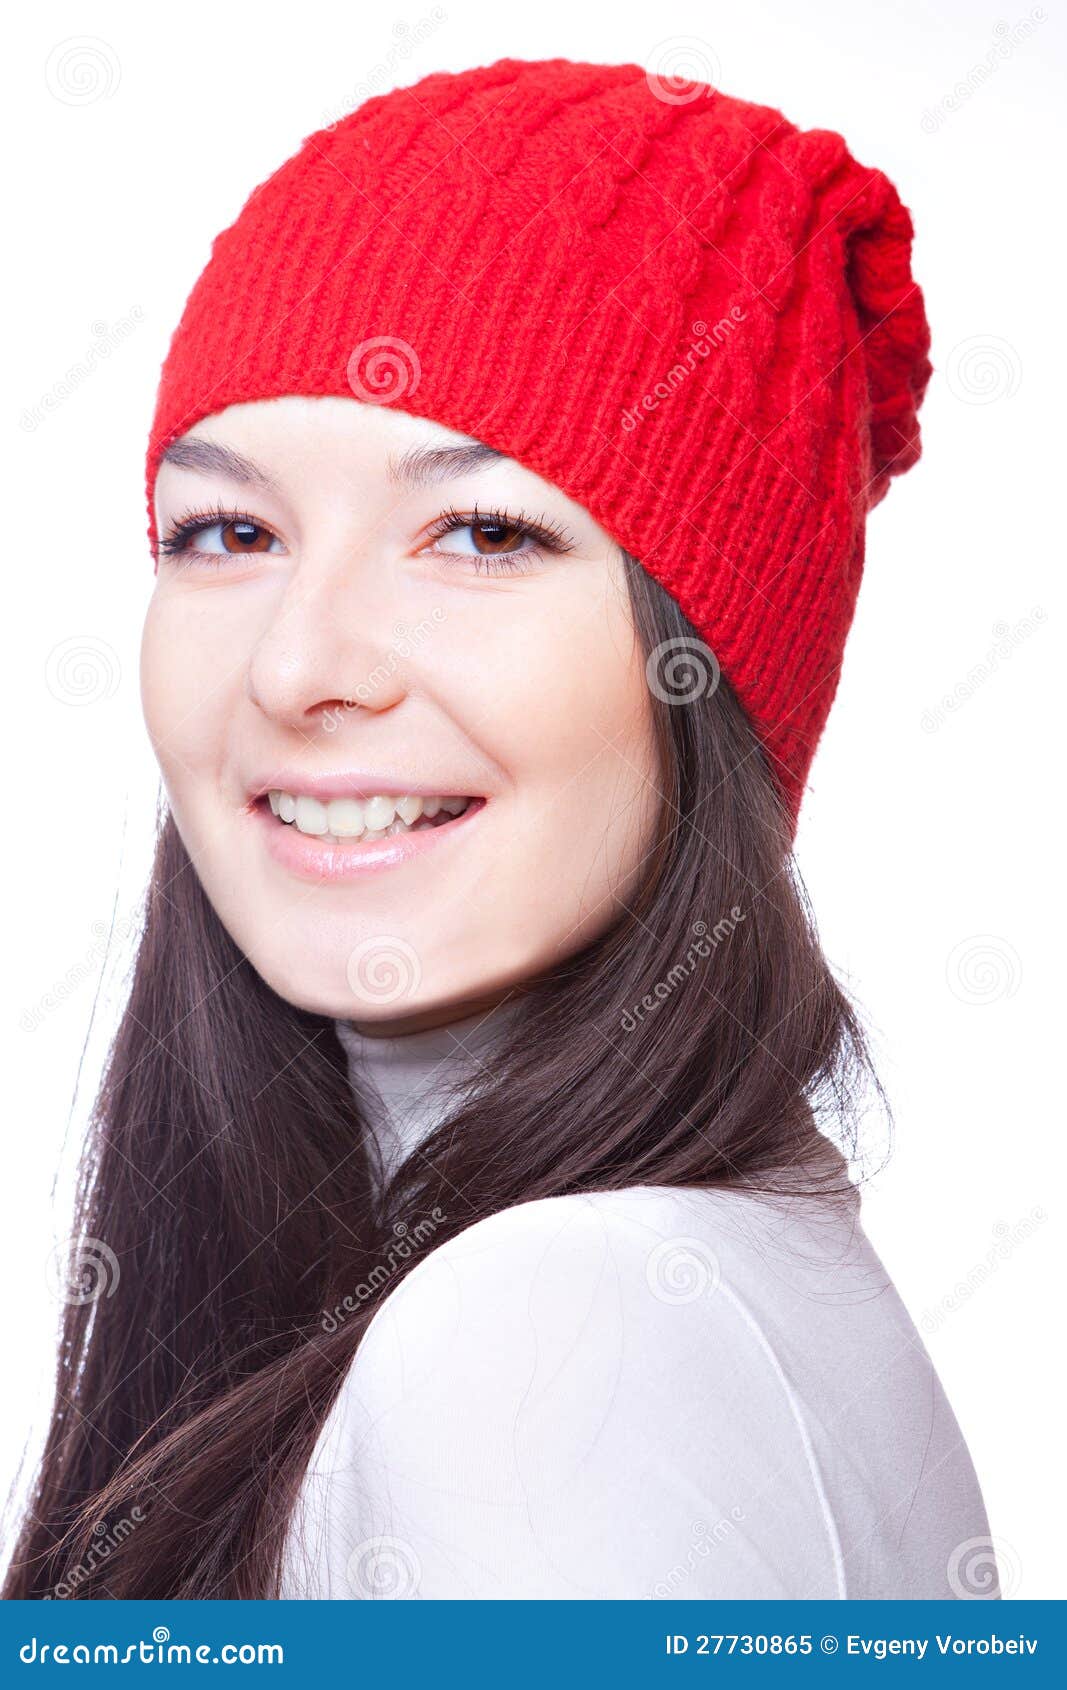 Face of Beautiful Girl in Red Cap Stock Image - Image of beautiful ...